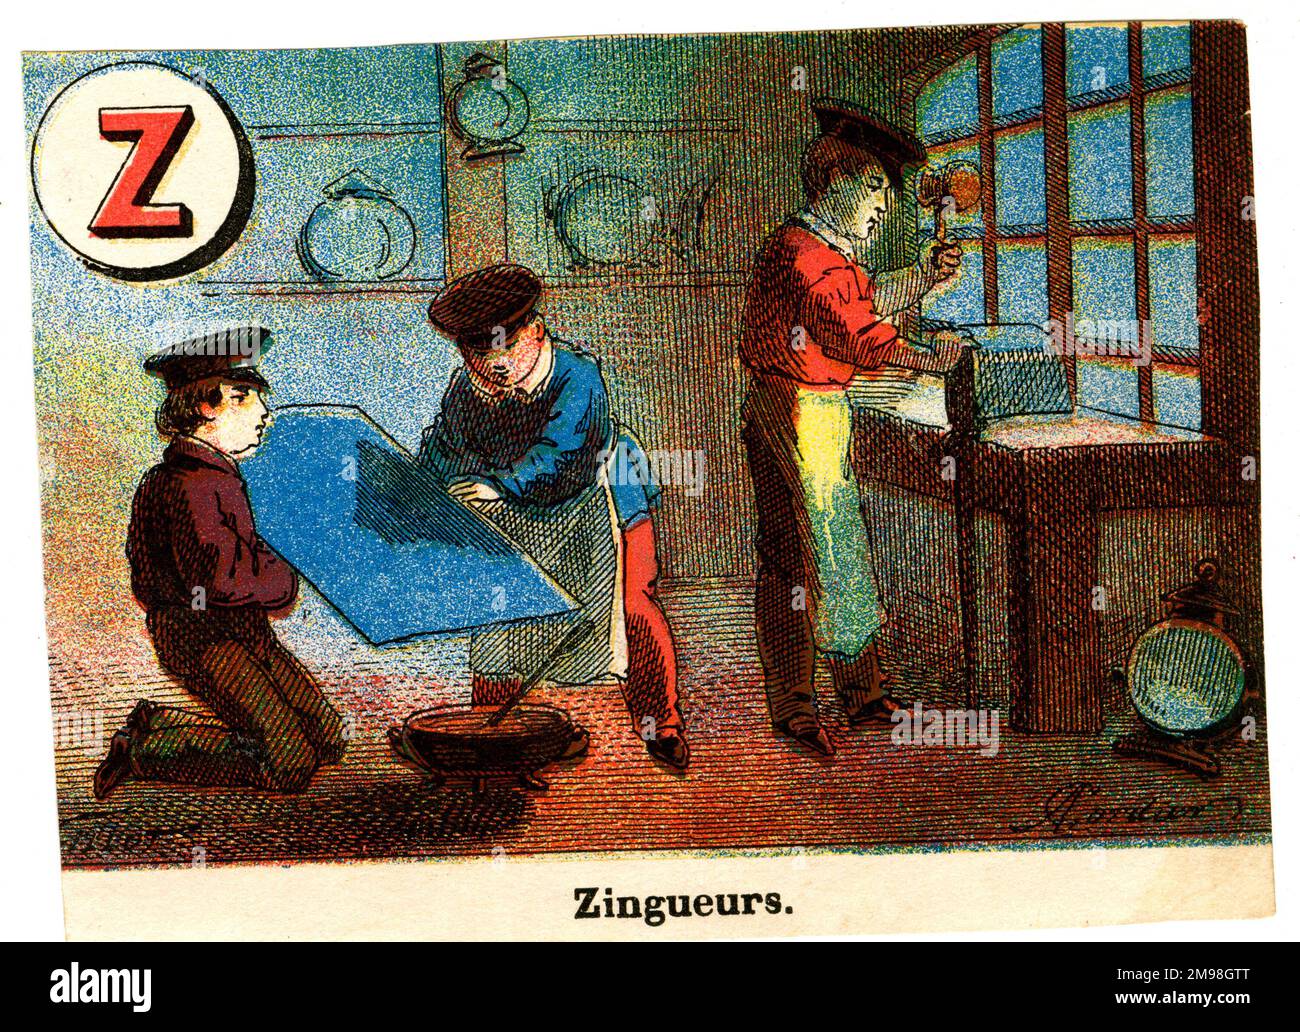 French Railway Alphabet - Z for Zingueurs (metalworkers). Stock Photo